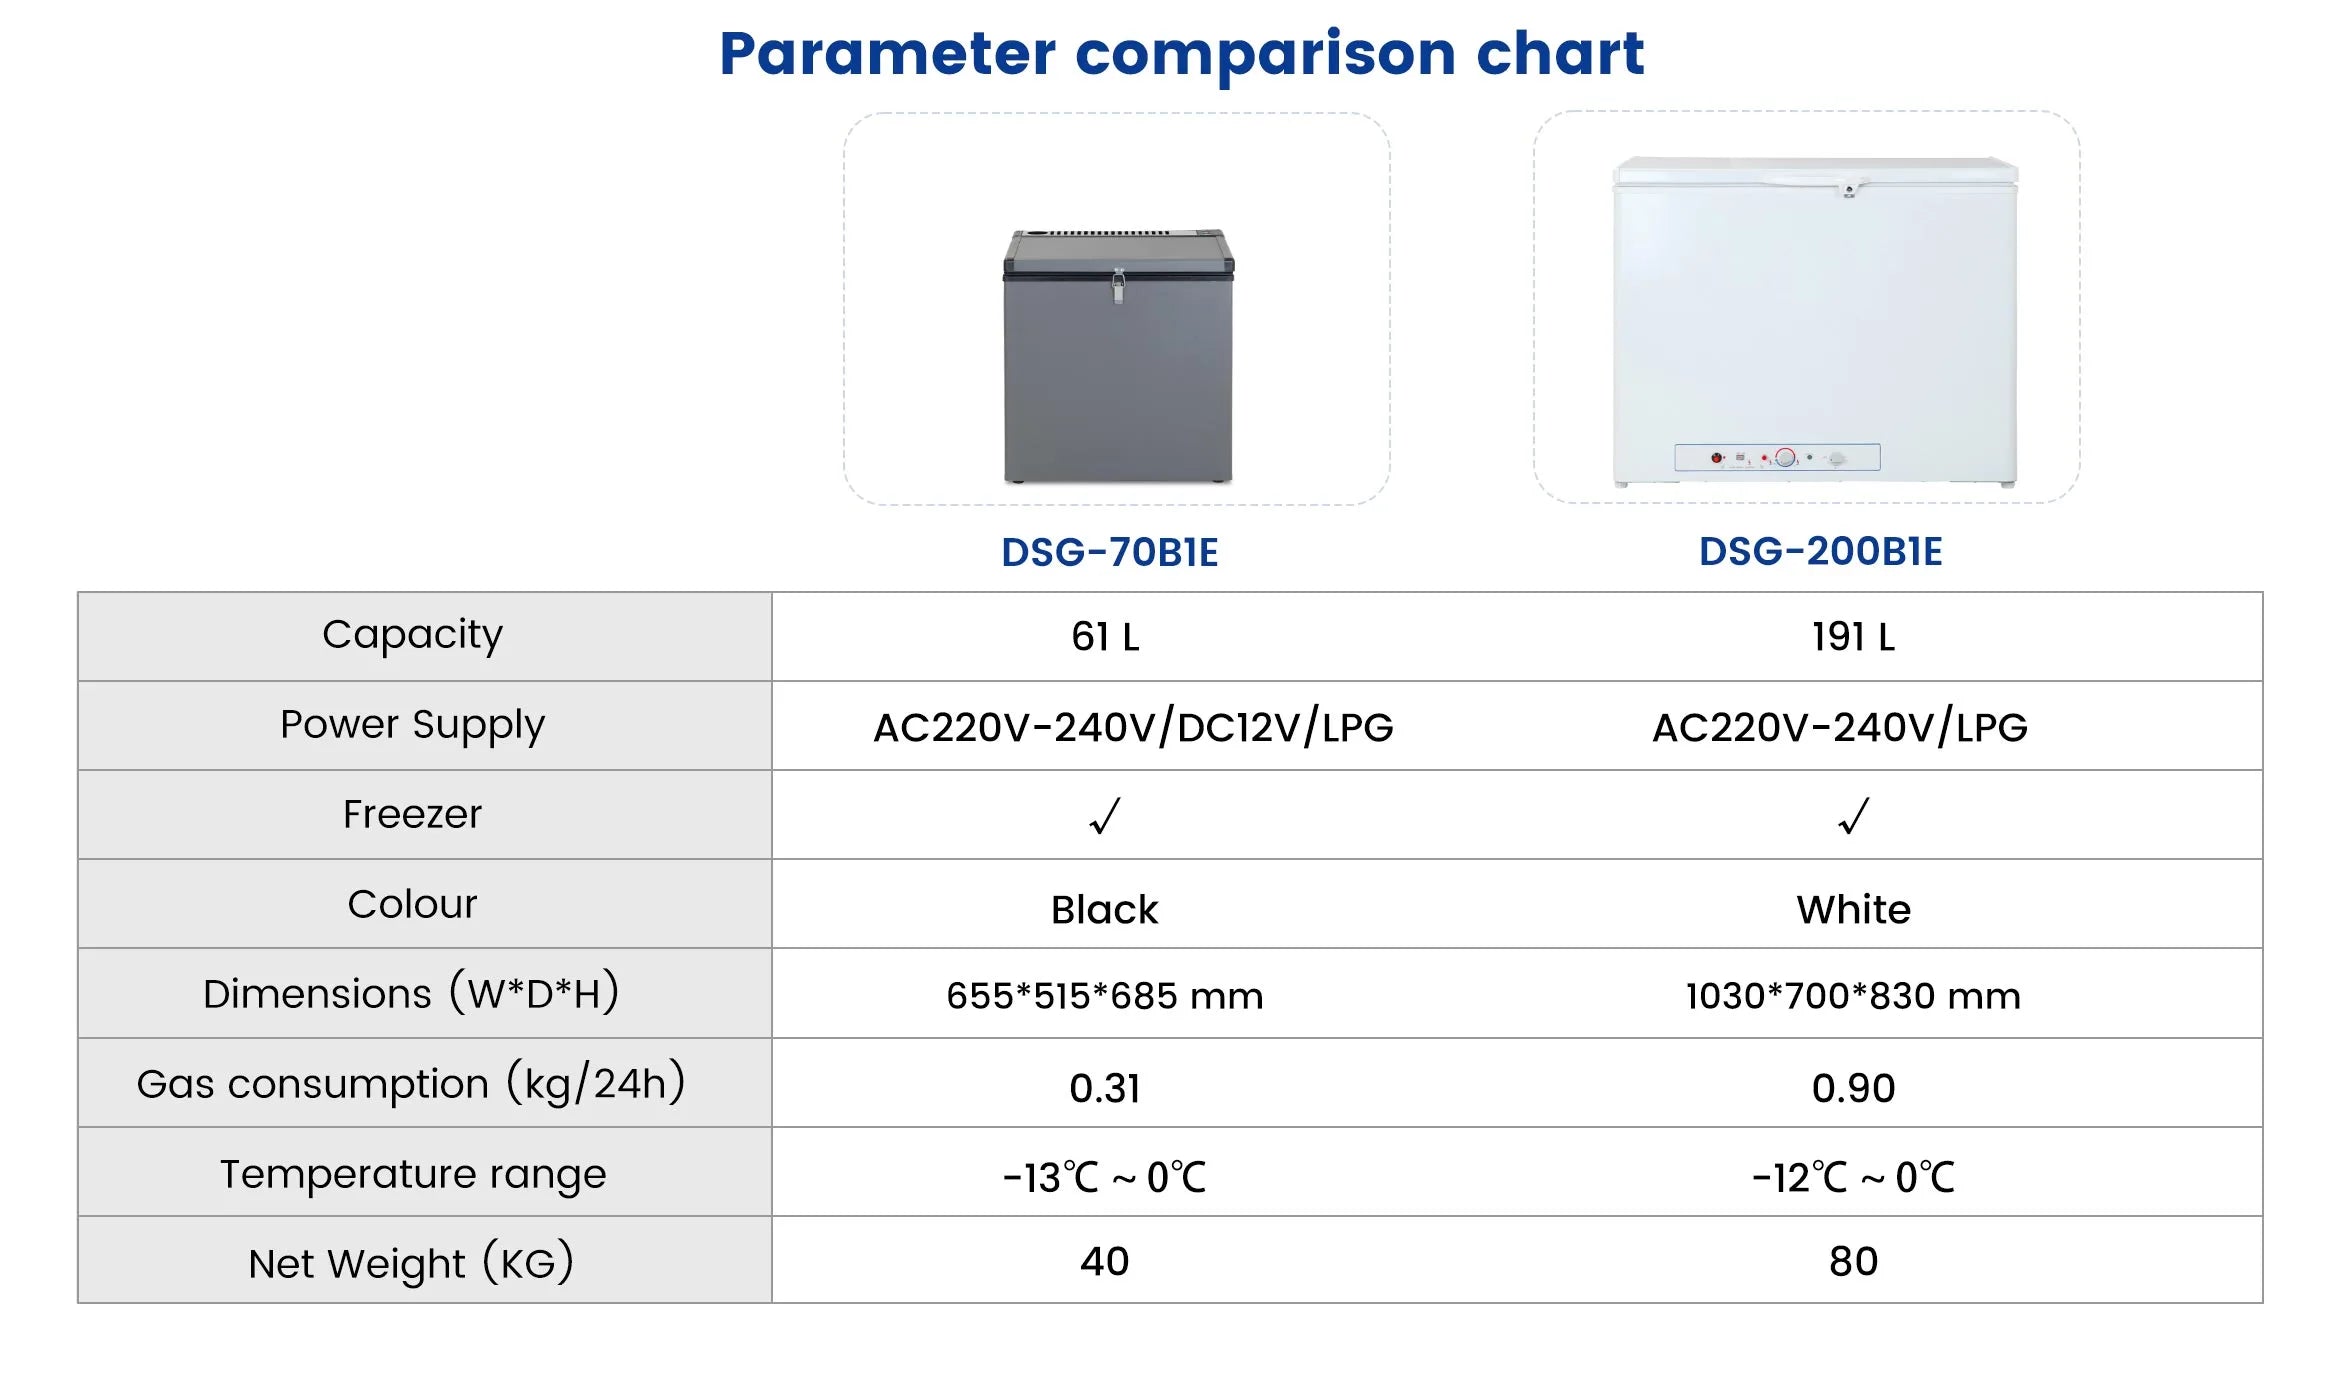 DSG-200B1E Parameter comparison chart